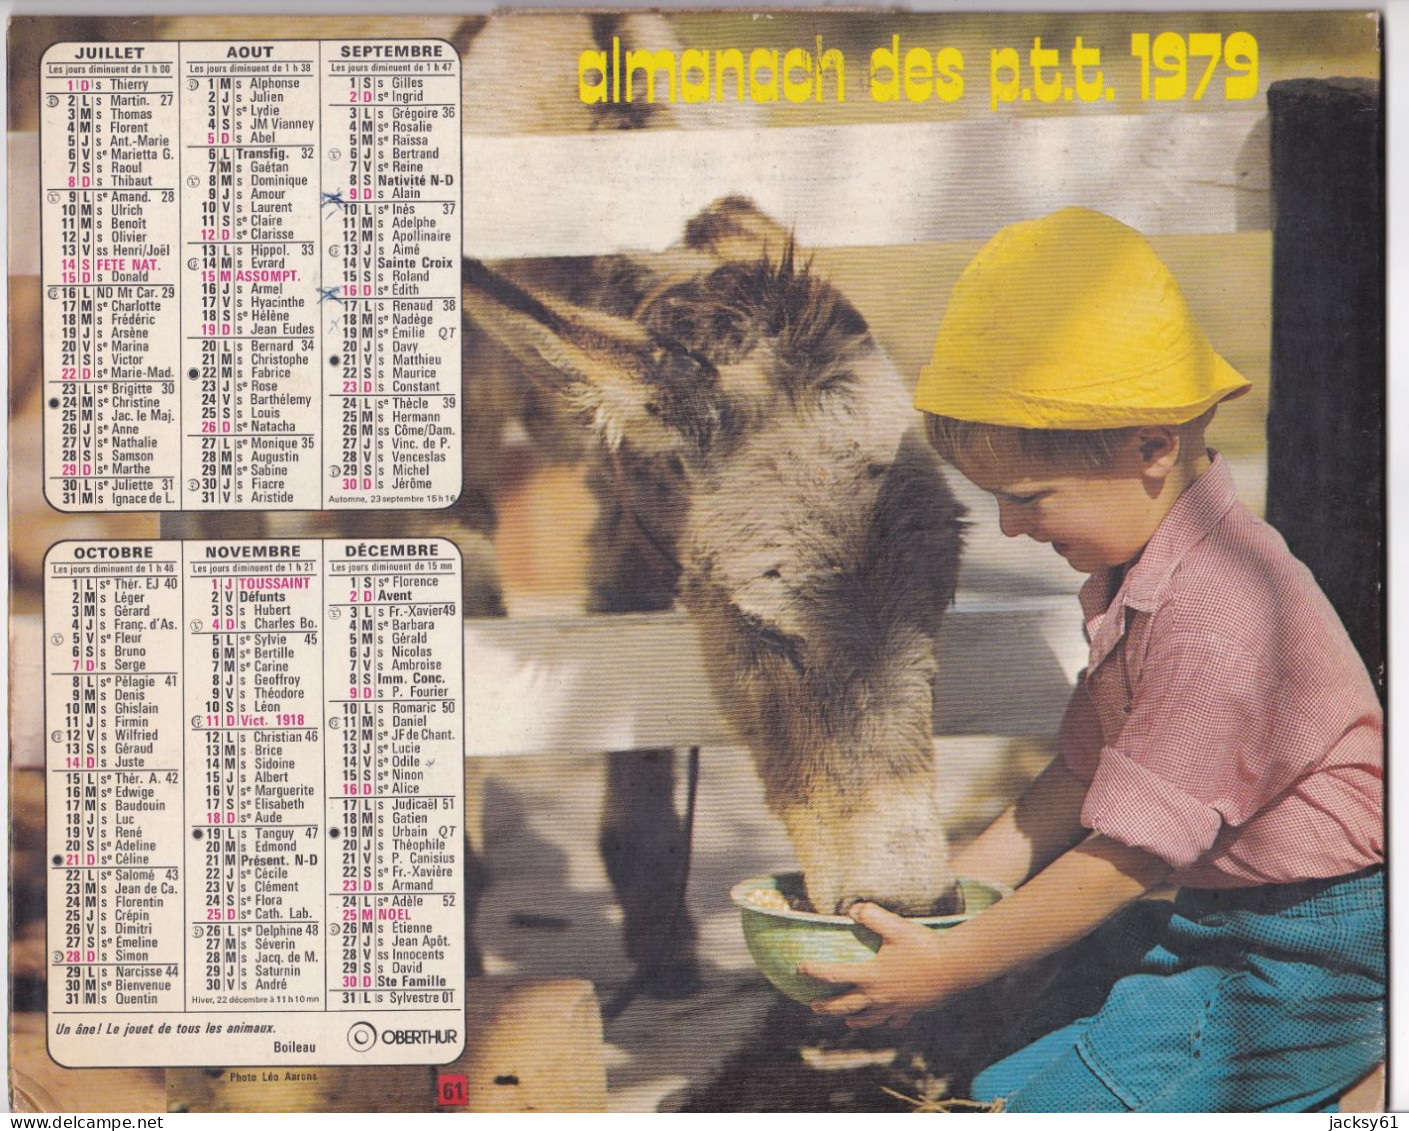 Almanach Des P.T.T.  1979 - Tamaño Grande : 1971-80